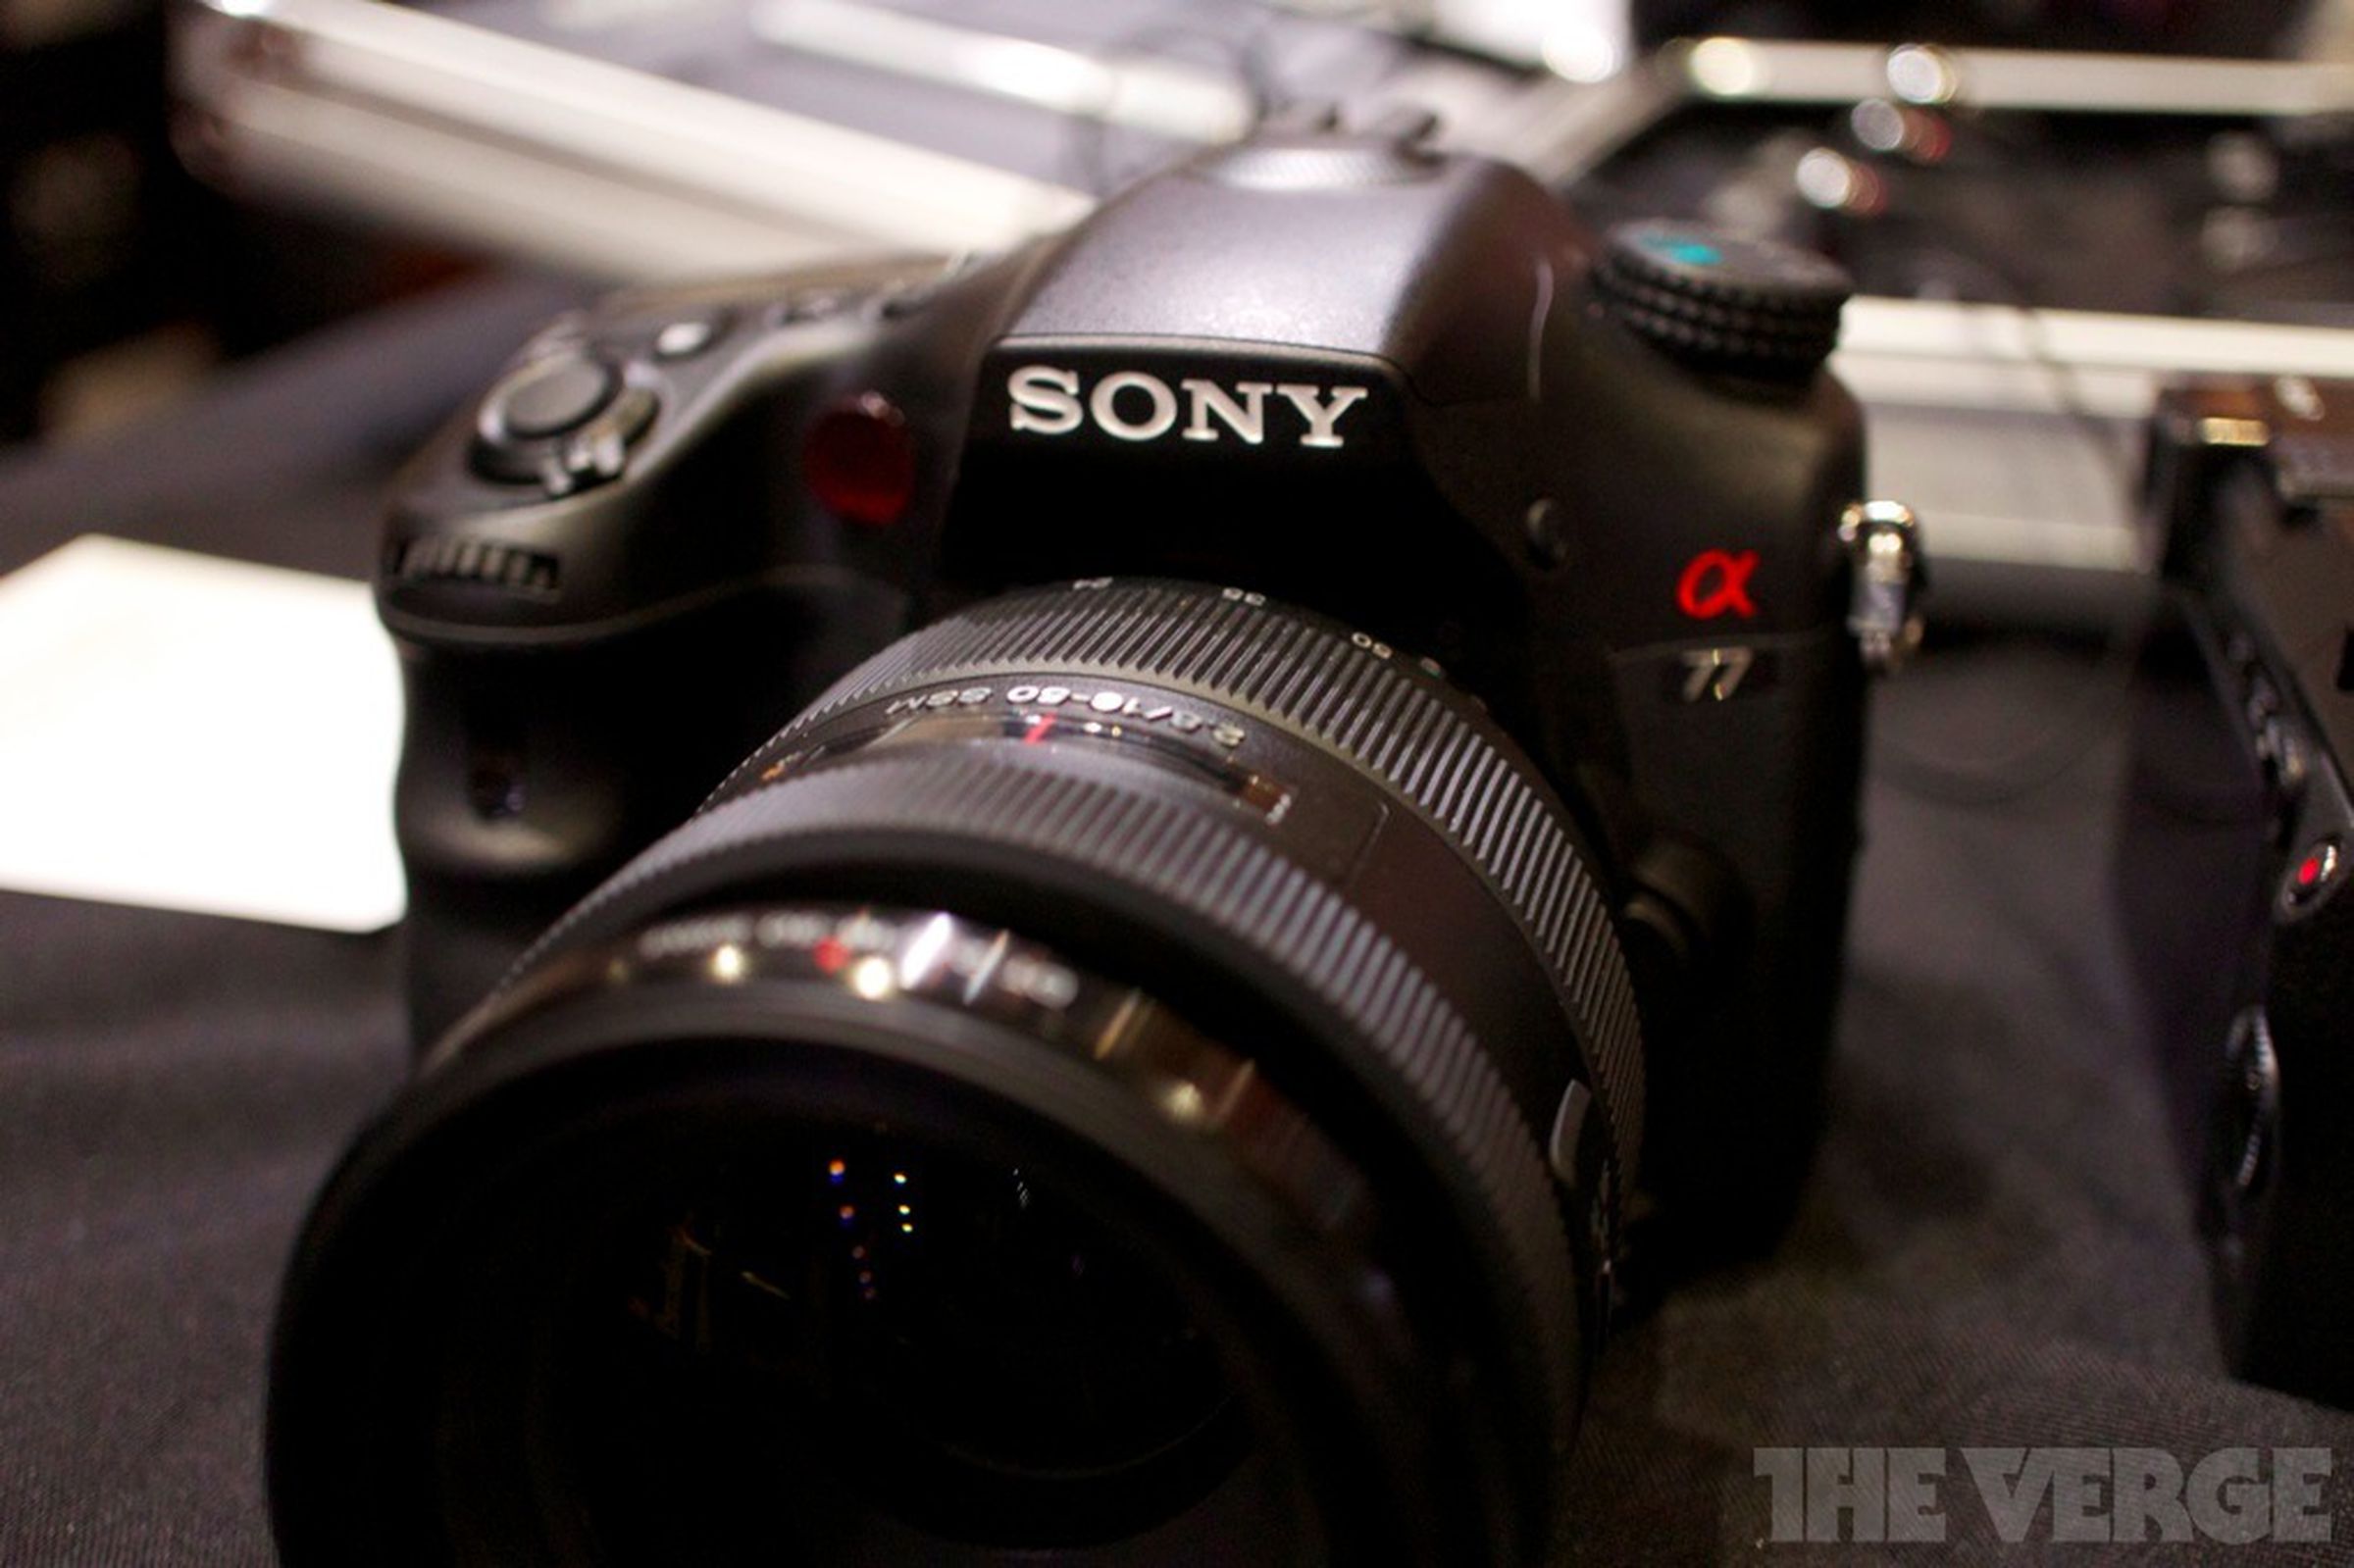 Sony A77 and NEX-7 hands-on (photos)